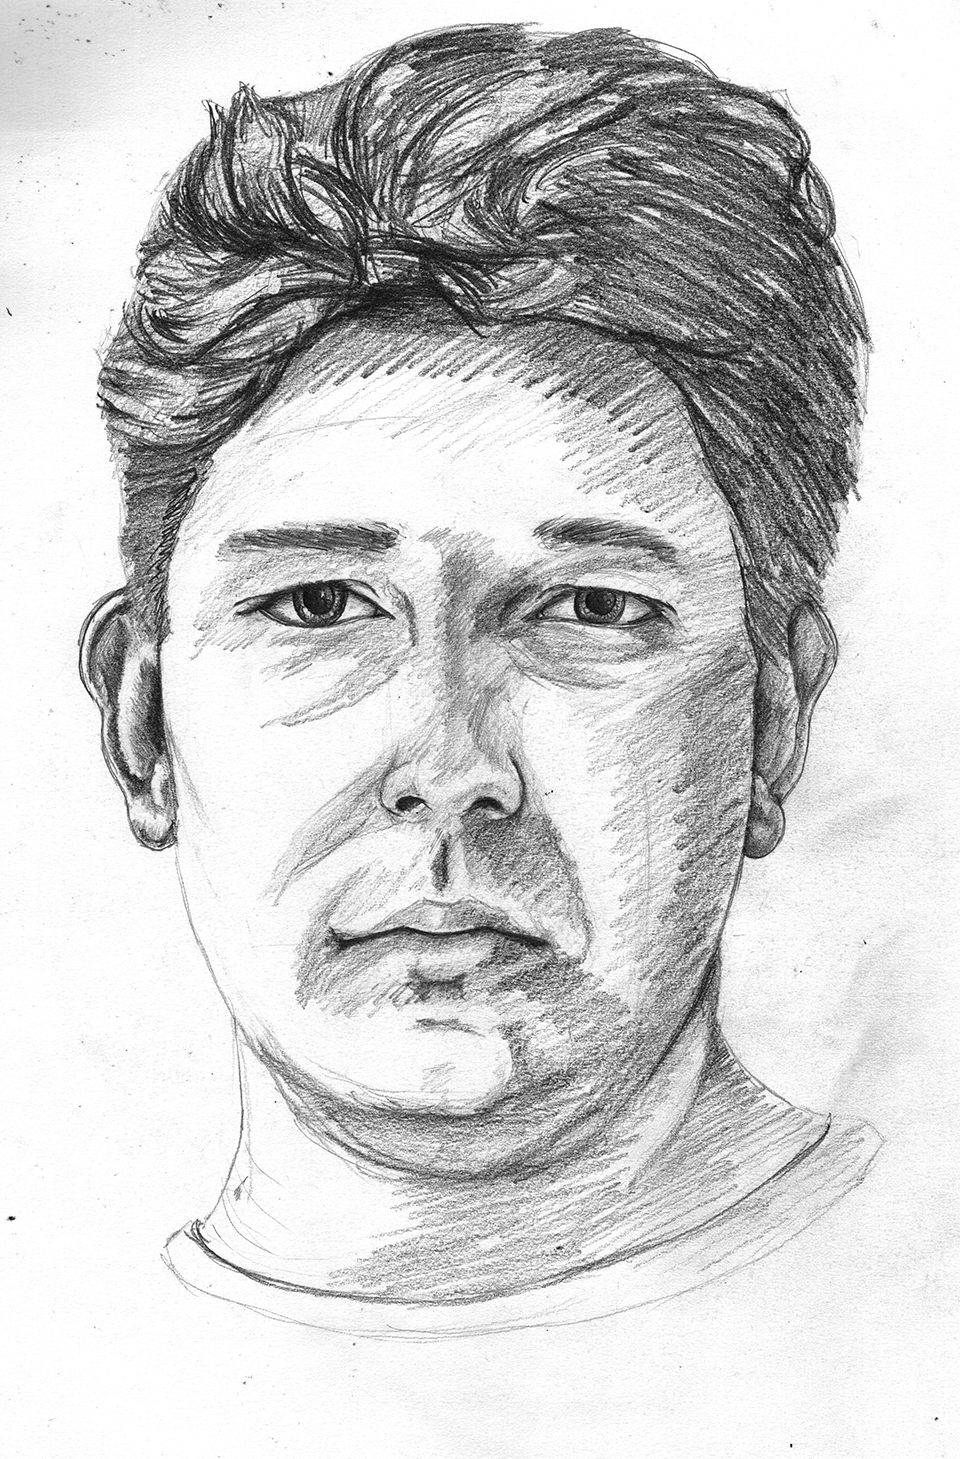 sketch___self_portrait_by_snacuum-d7tjqxc.jpg